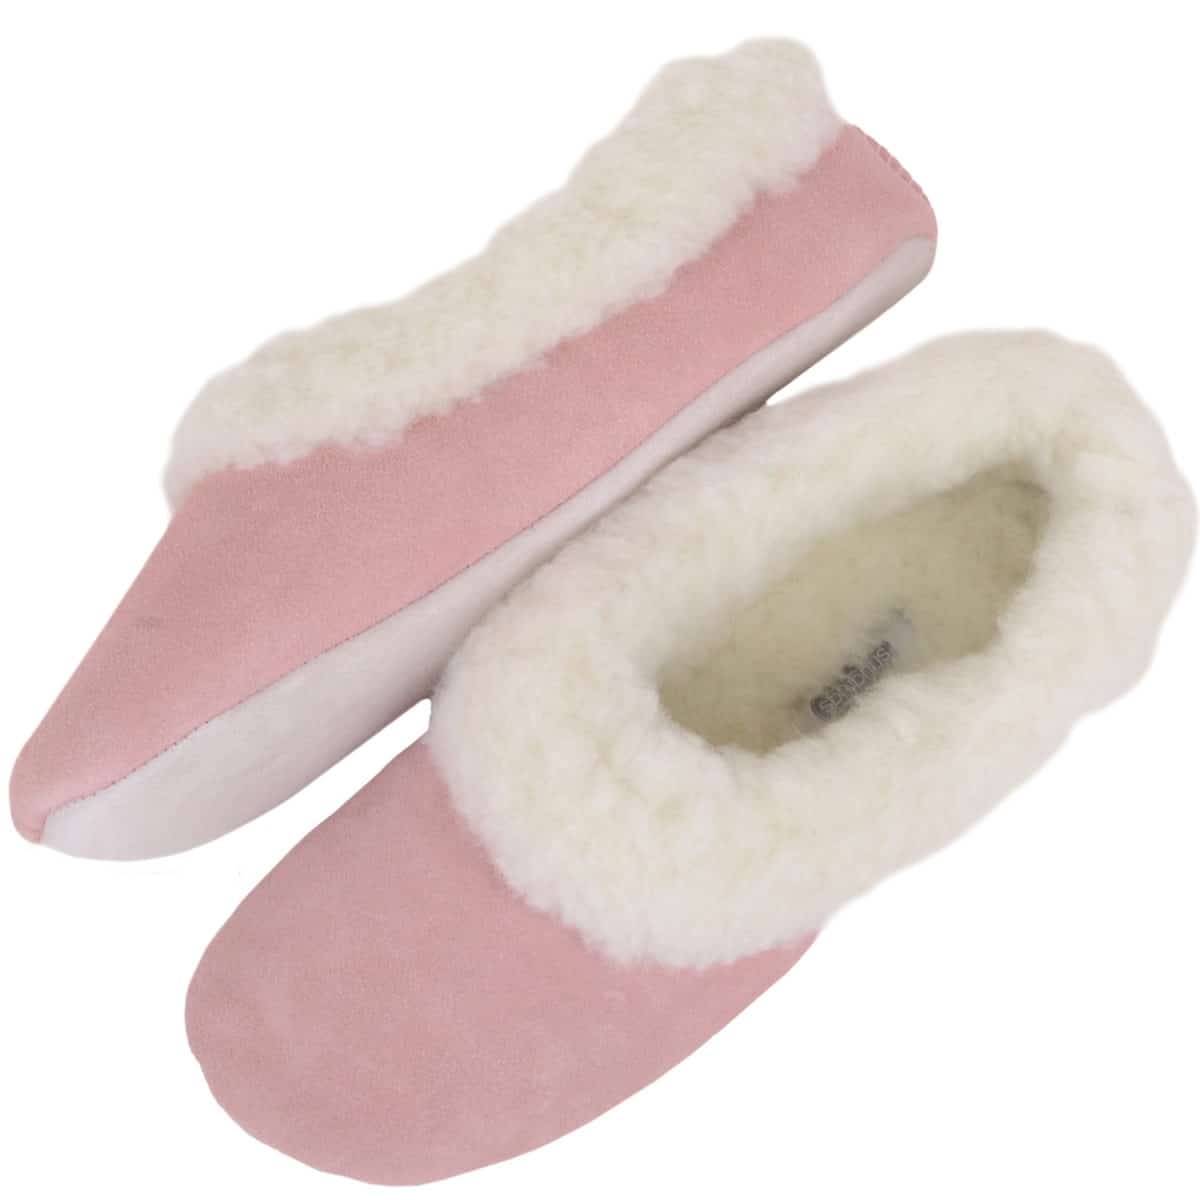 snugrugs ladies slippers